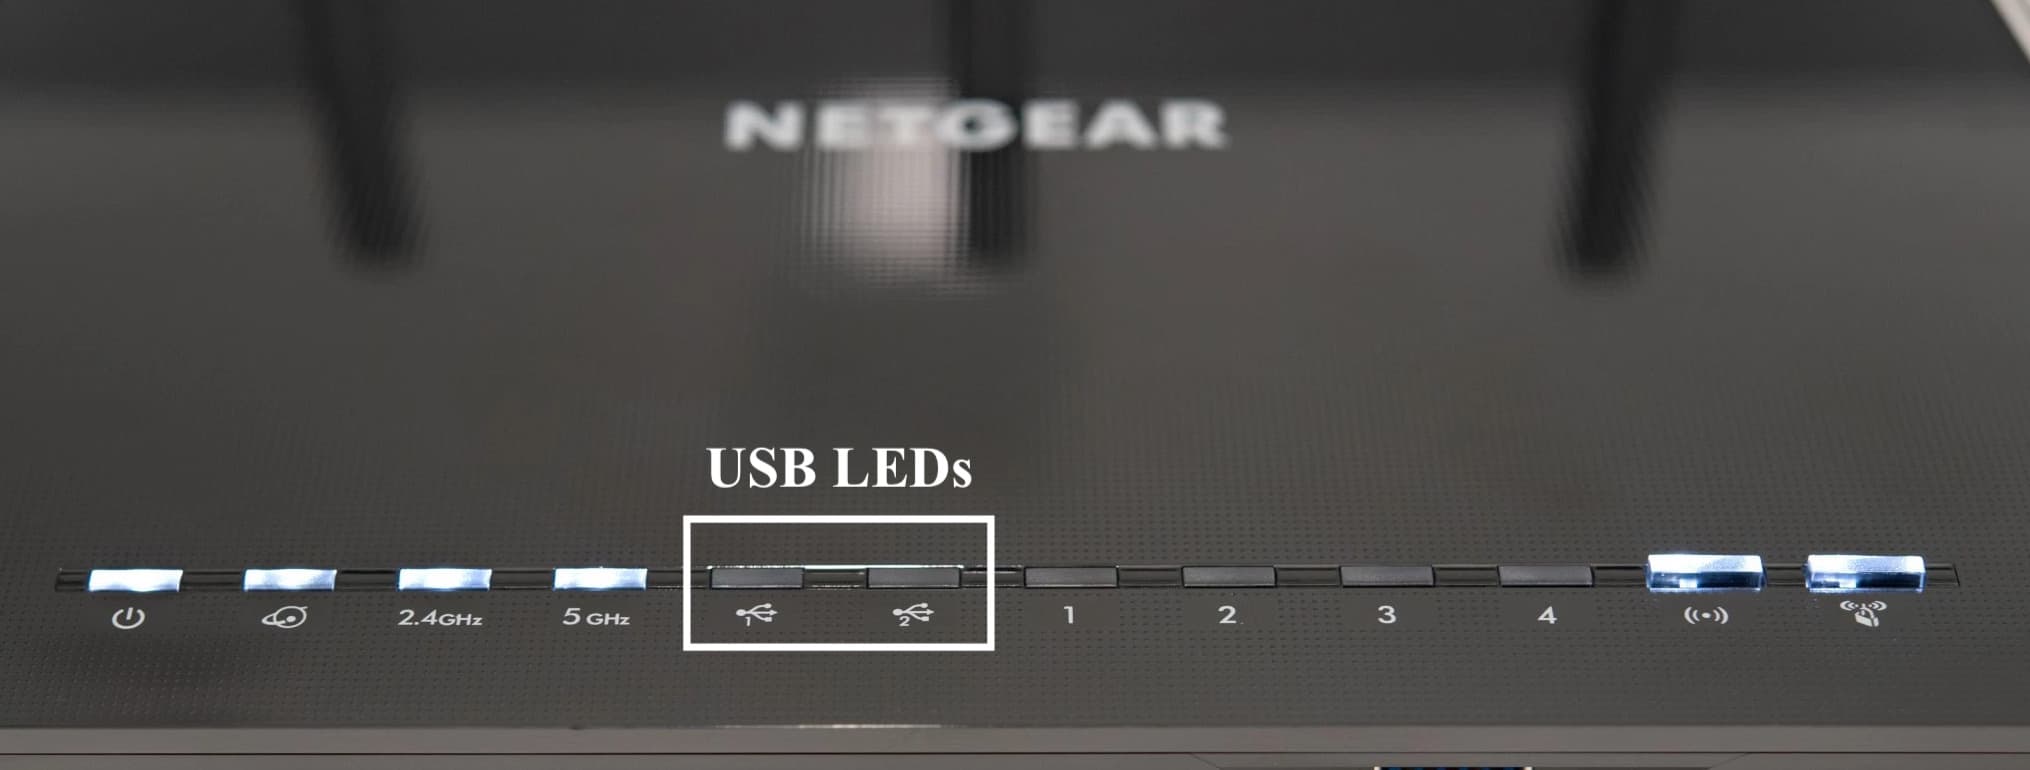 USB LEDs on Netgear Router